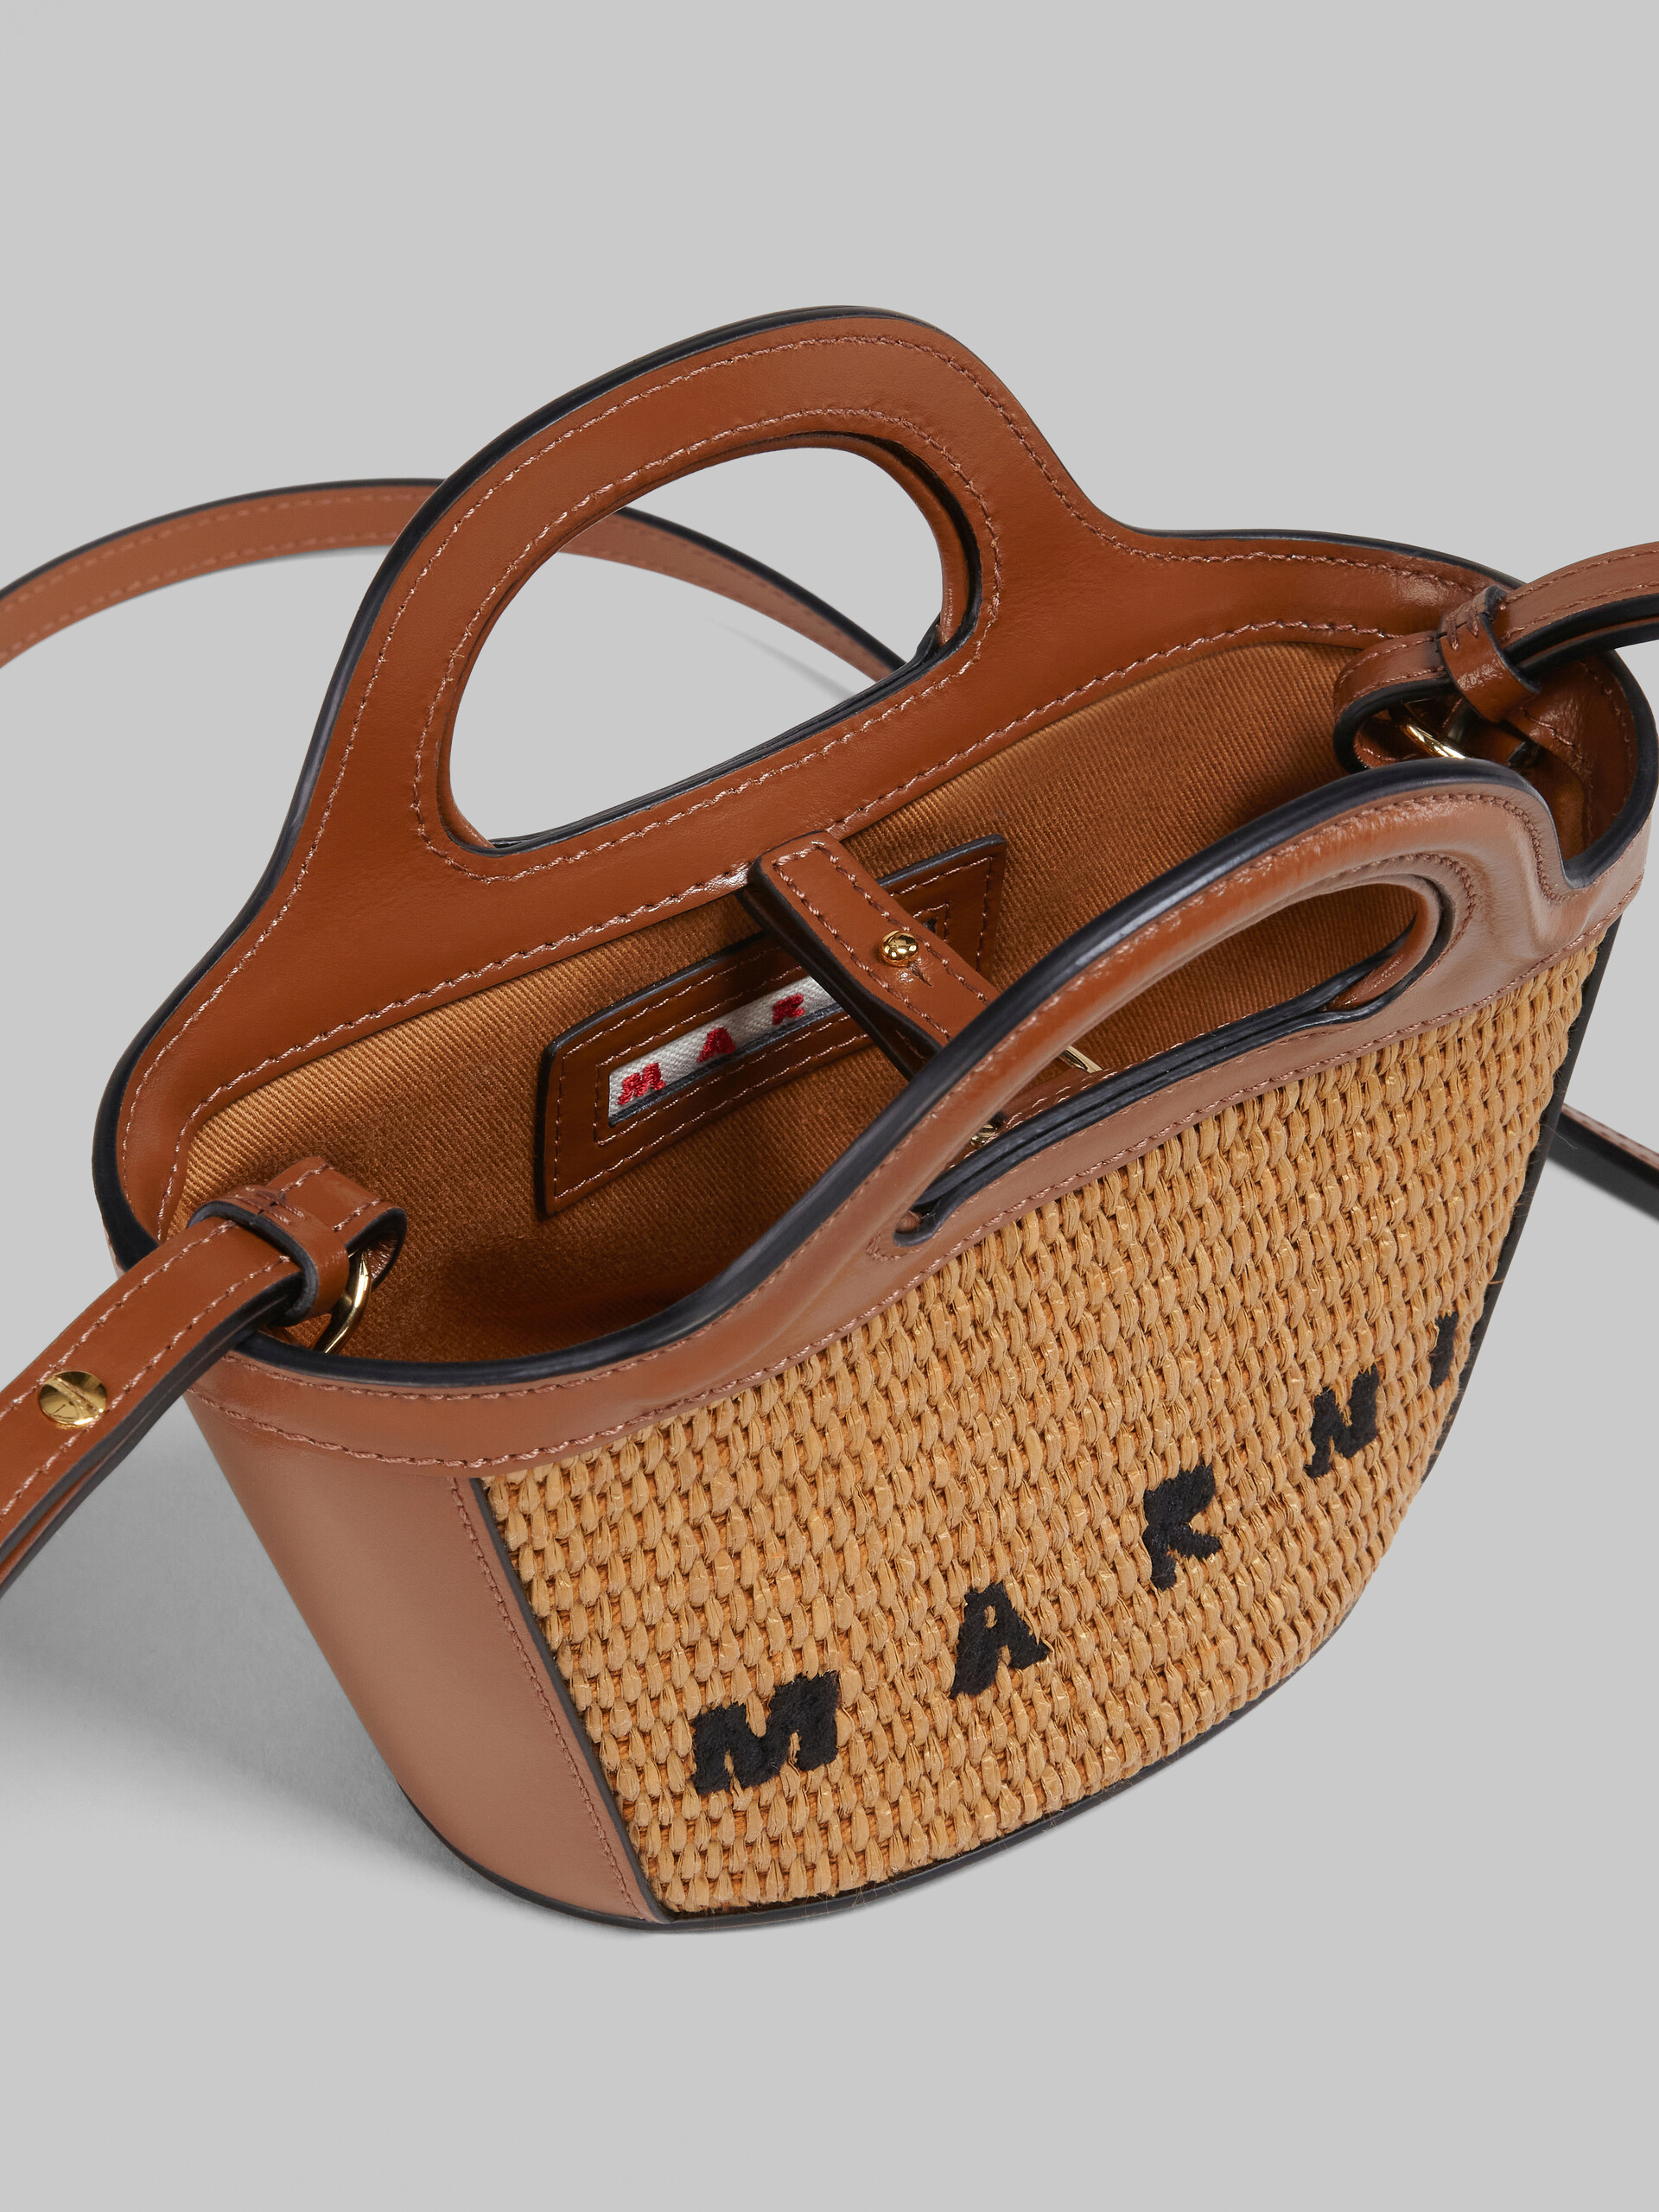 TROPICALIA micro bag in brown leather and raffia - Handbag - Image 4